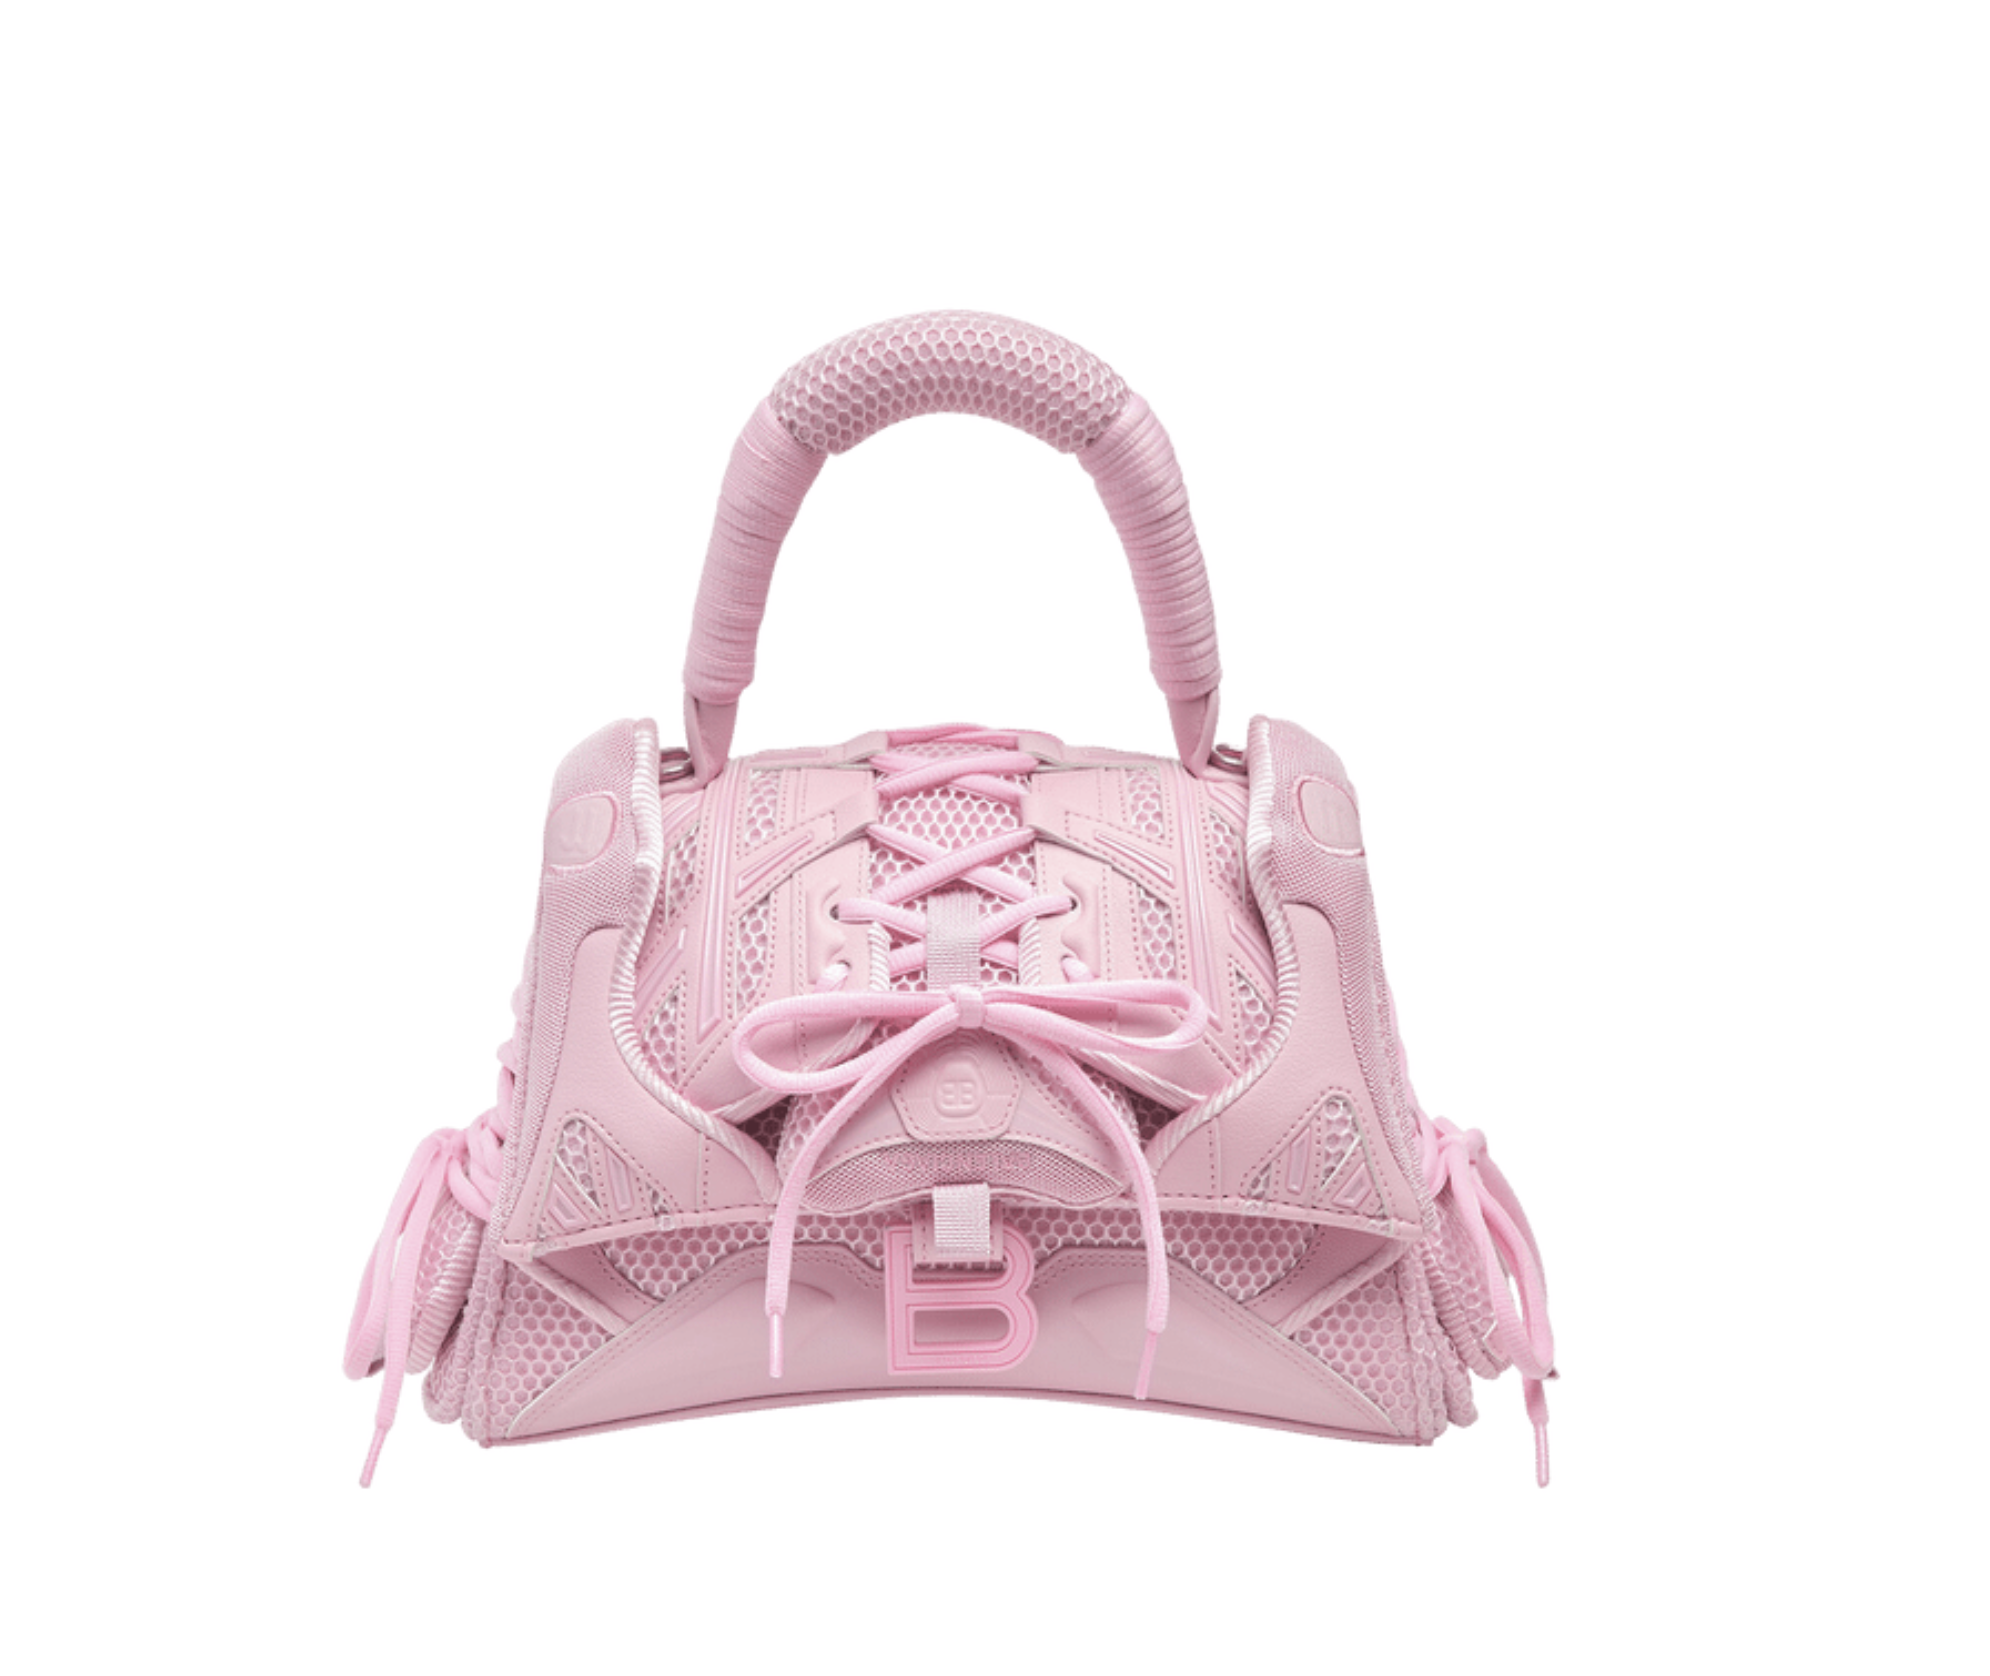 five-bags-we-cant-wait-to-wear-this-year-trainershead-small-handbag-pink-balenciaga